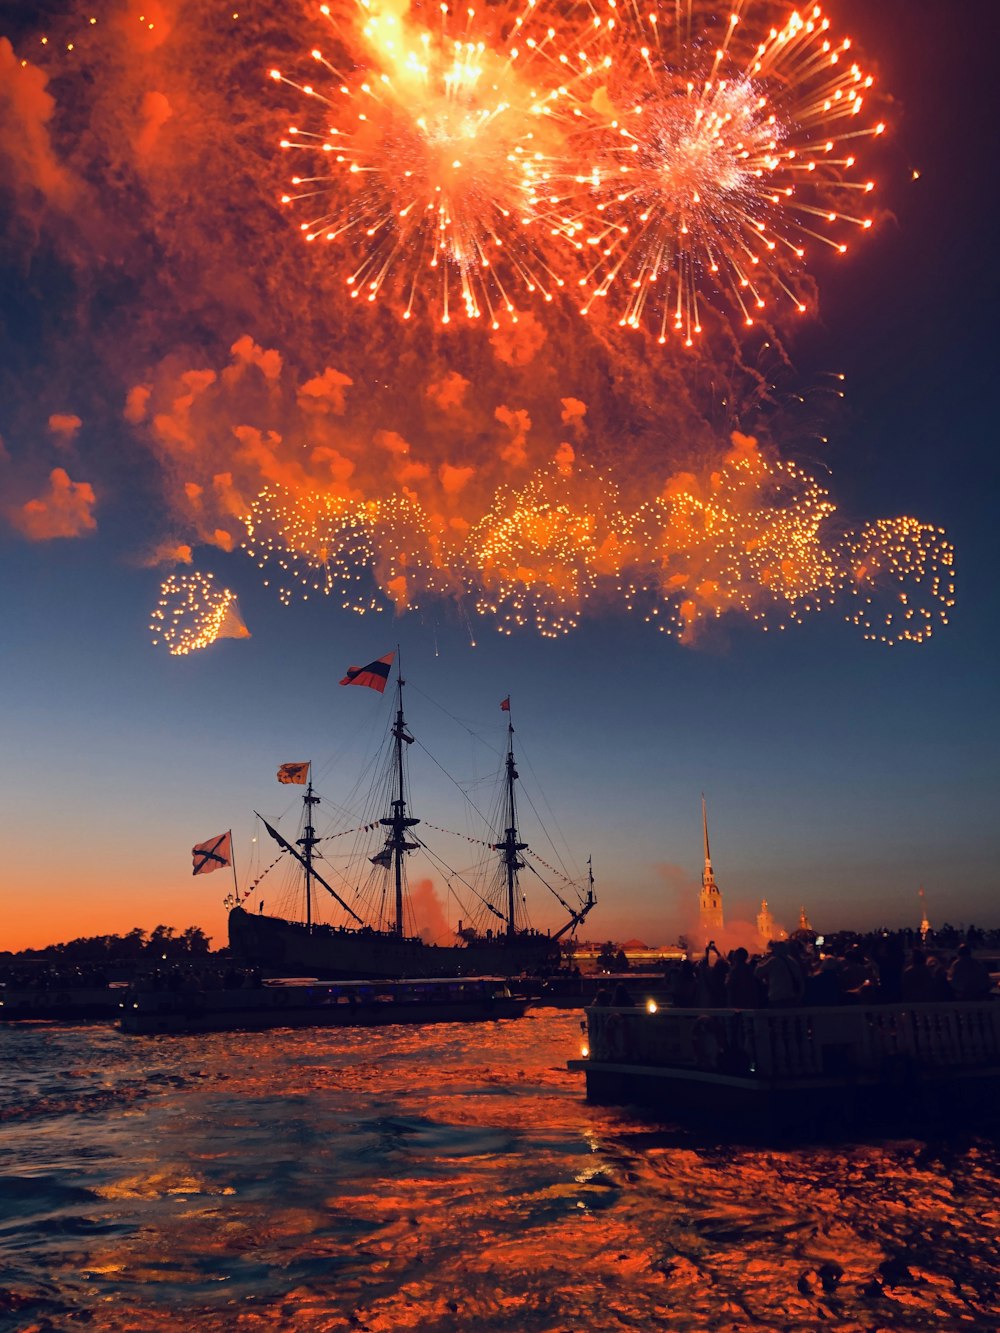 fireworks above ships